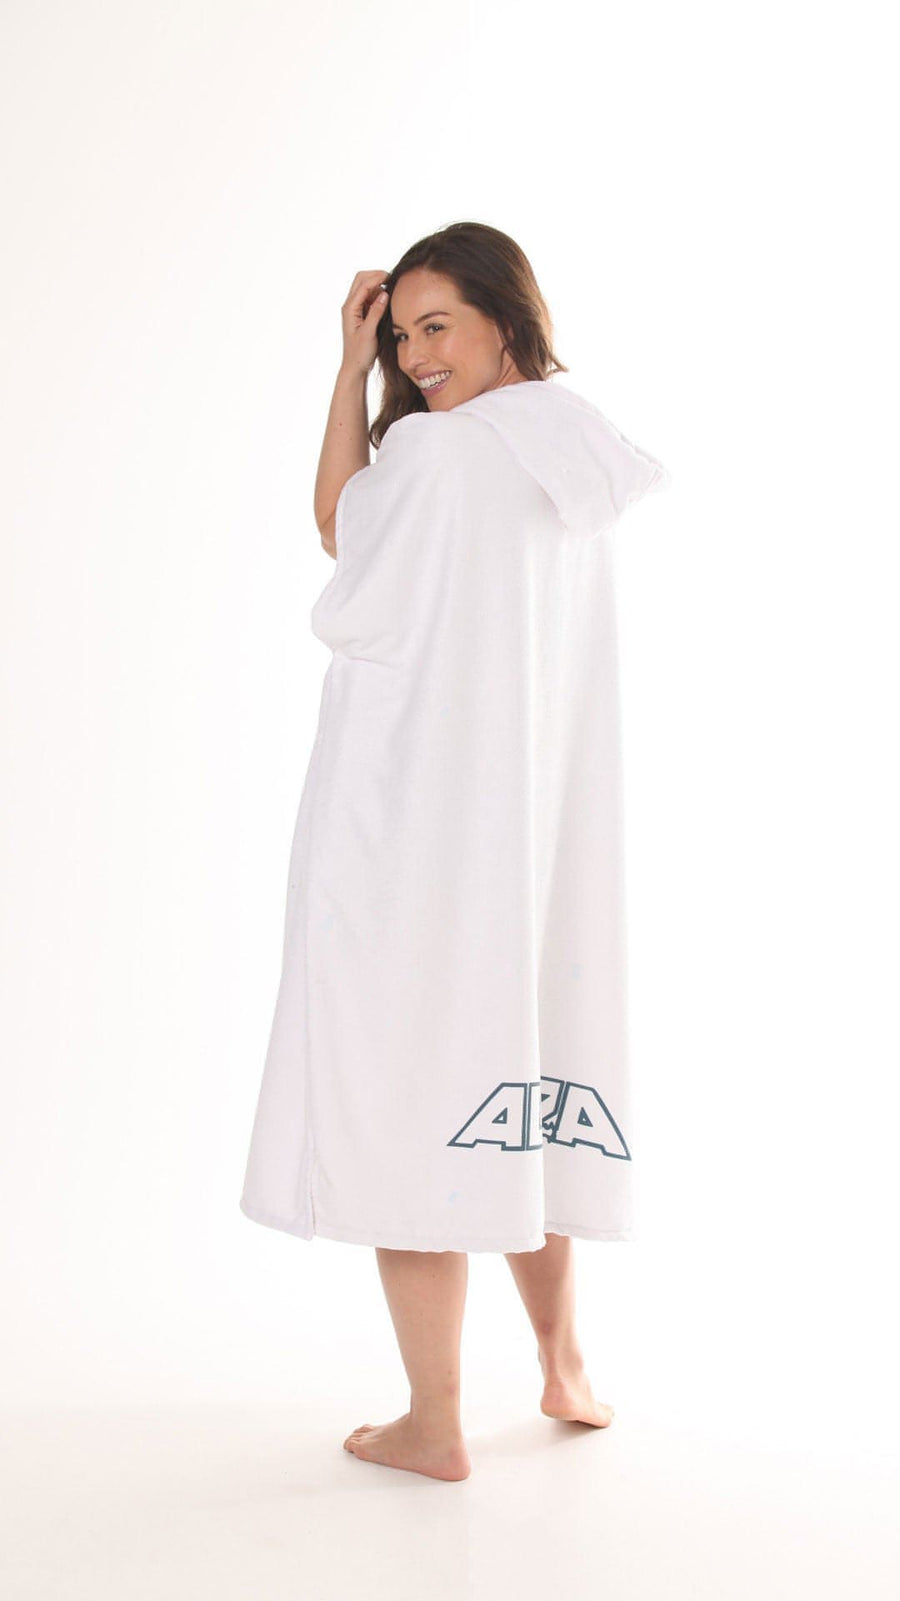 Hooded Towel - Mens, Womens, Unisex Adult White back